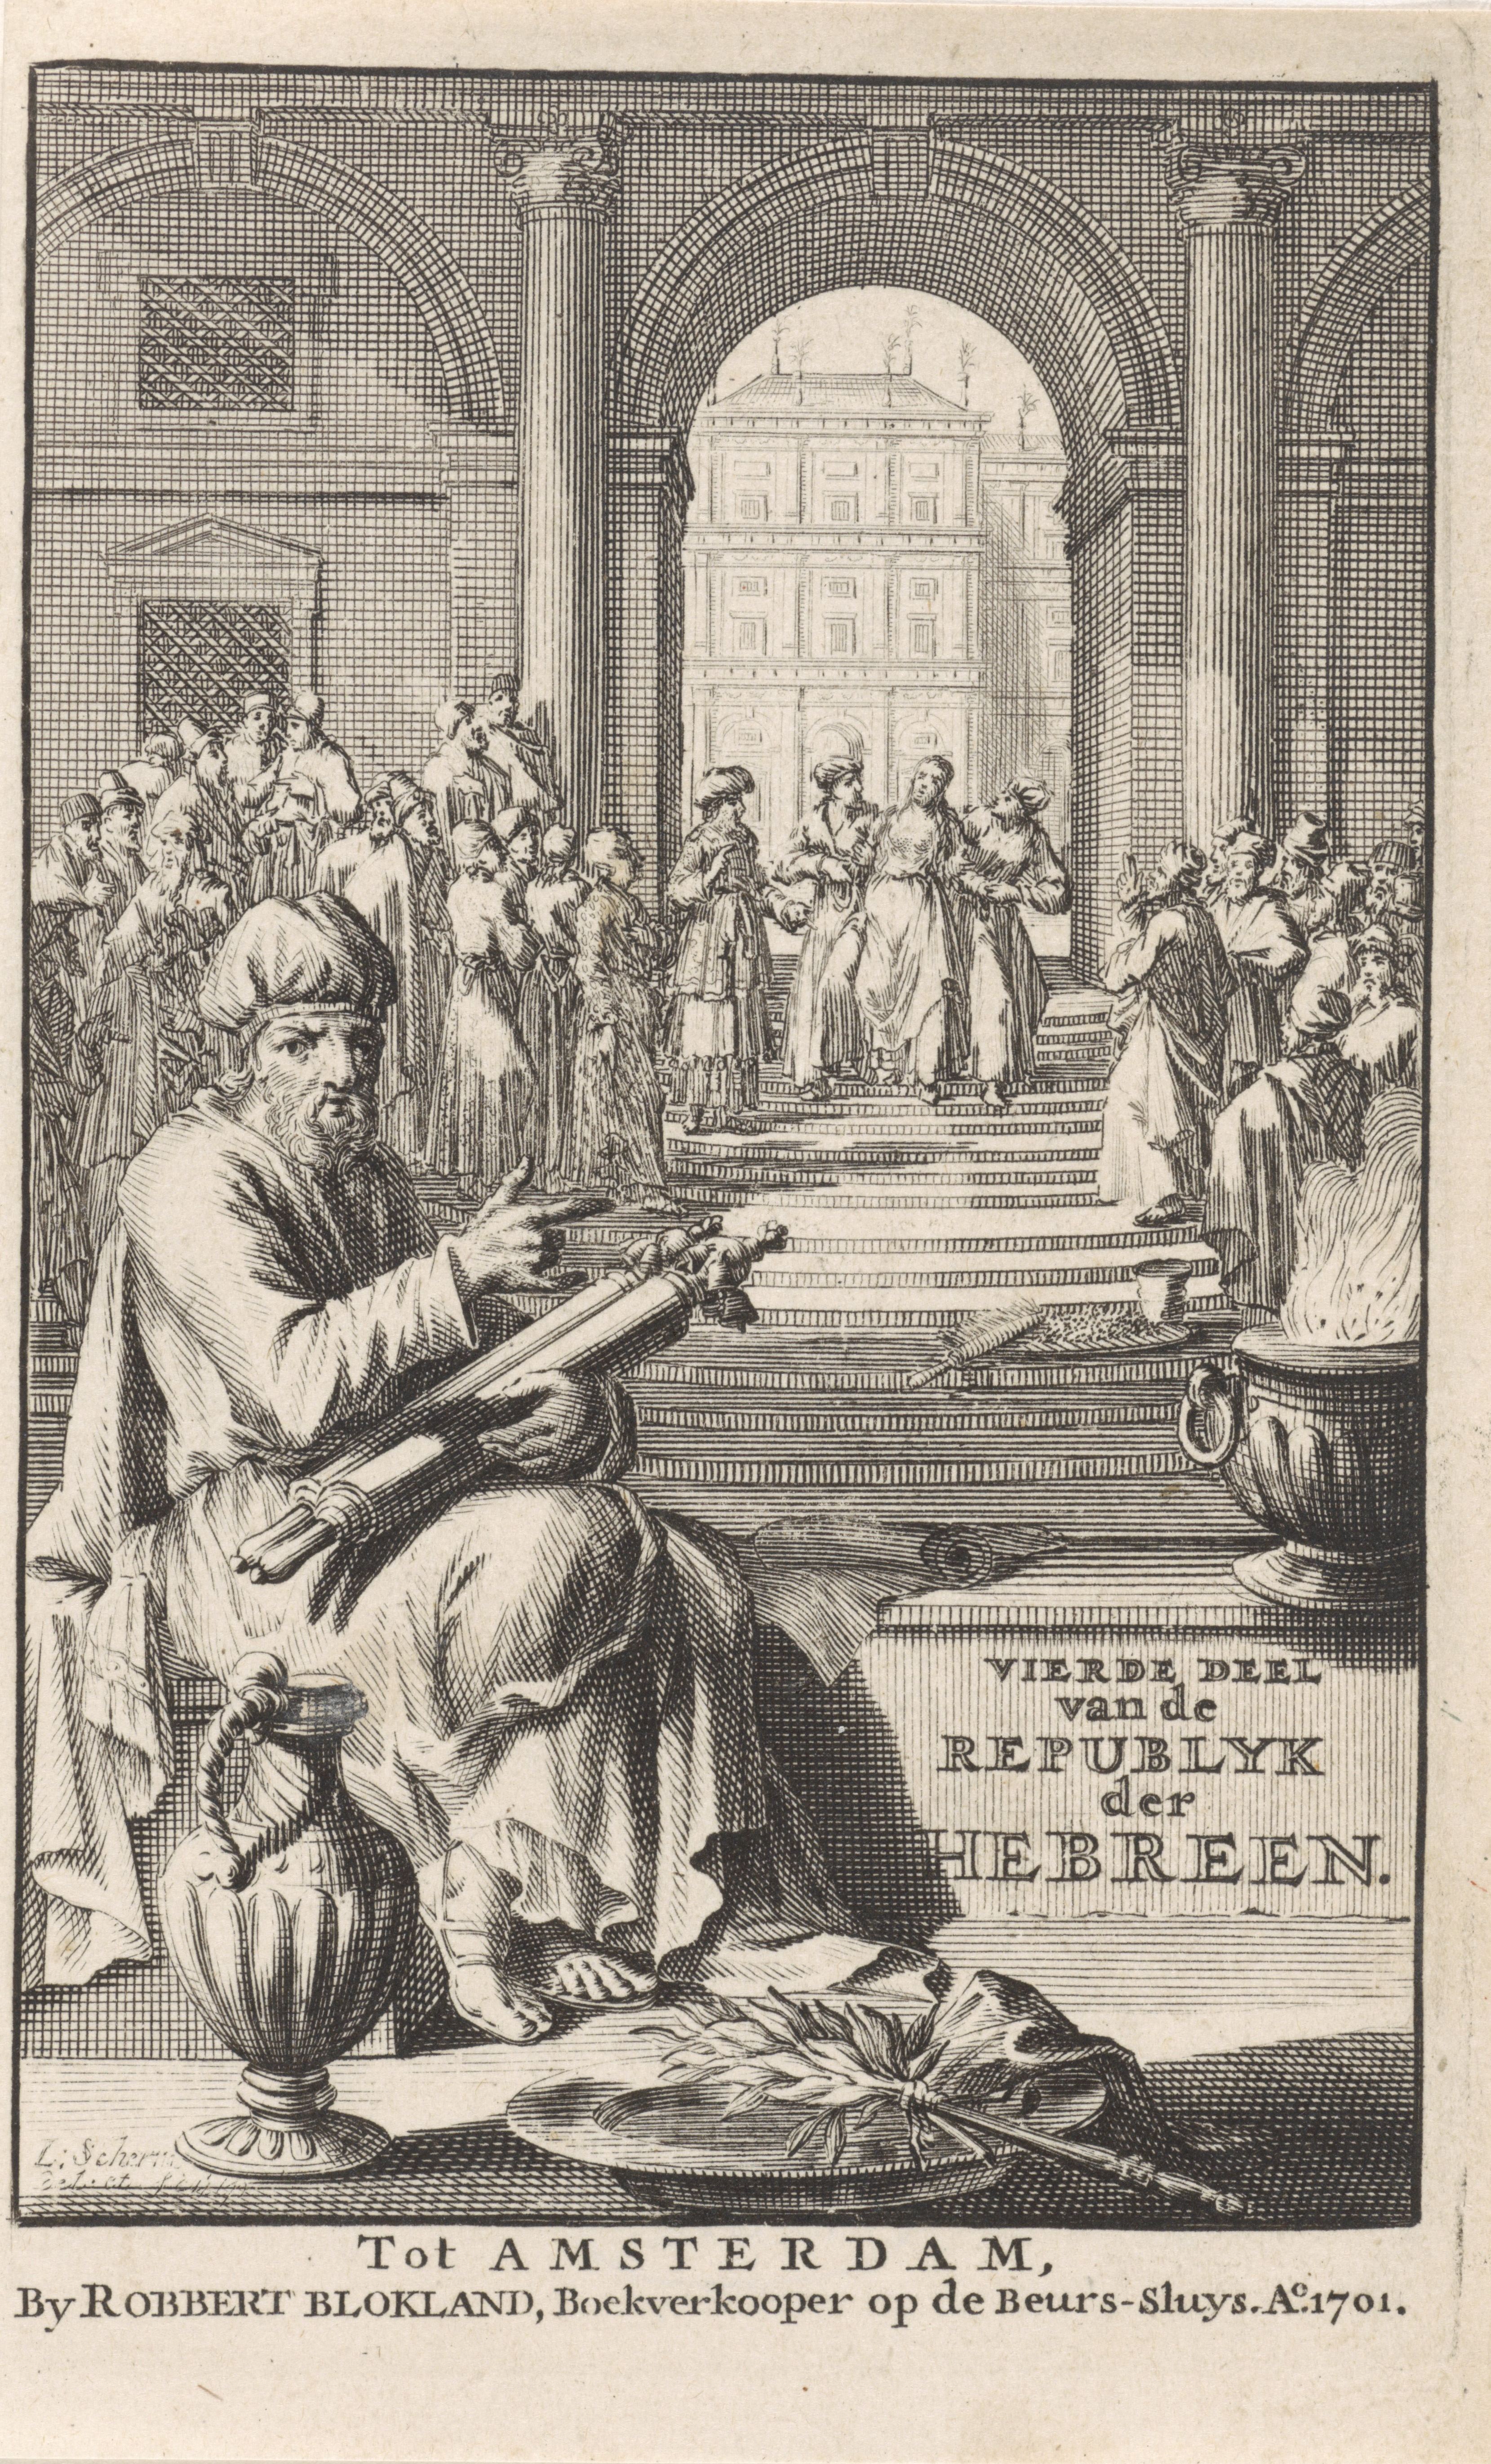 Laurens Scherm, Jews in the Temple, 1701. Engraving. © Rijksmuseum Amsterdam